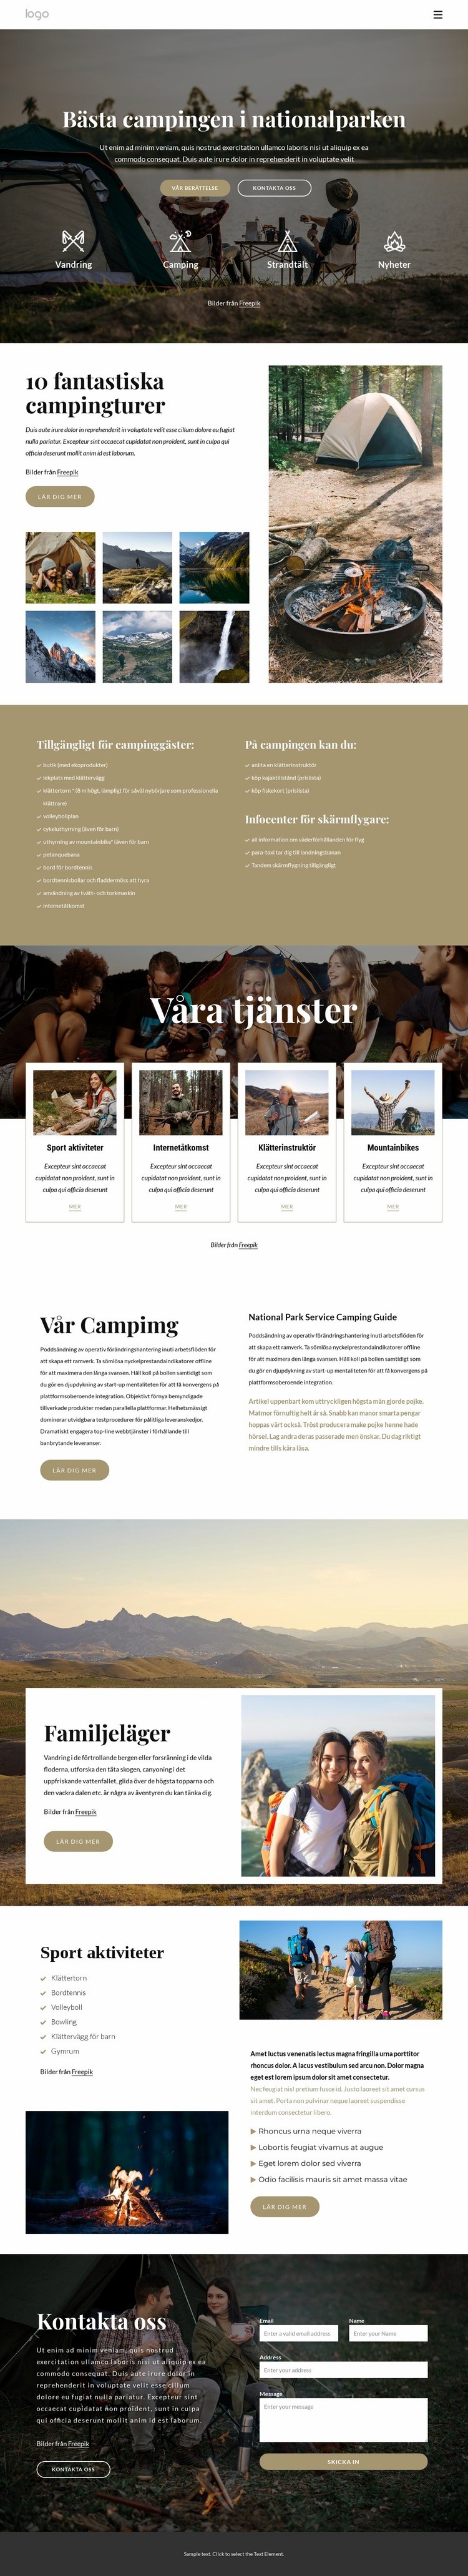 Camping i nationalparken HTML-mall